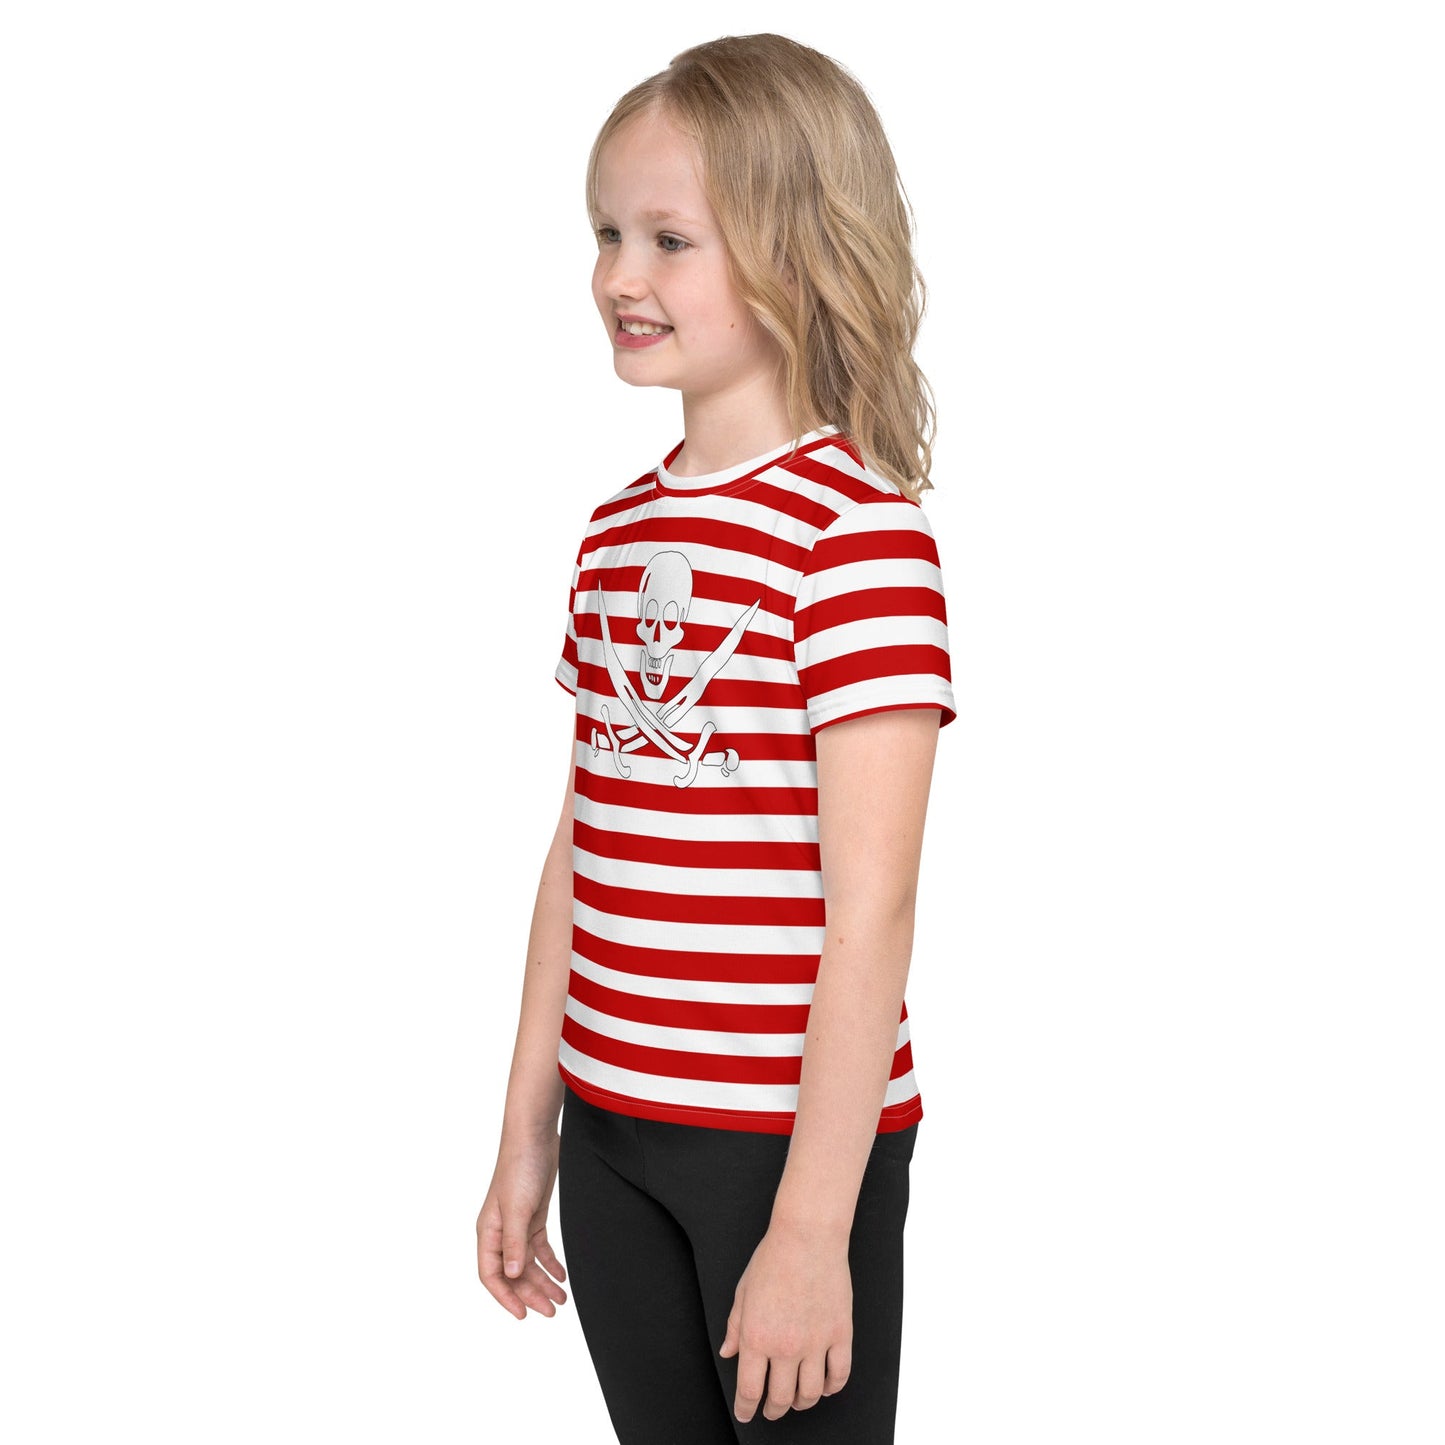 Pirate Night Kids crew neck t-shirt disney boundingdisney cosplaydisney costume#tag4##tag5##tag6#